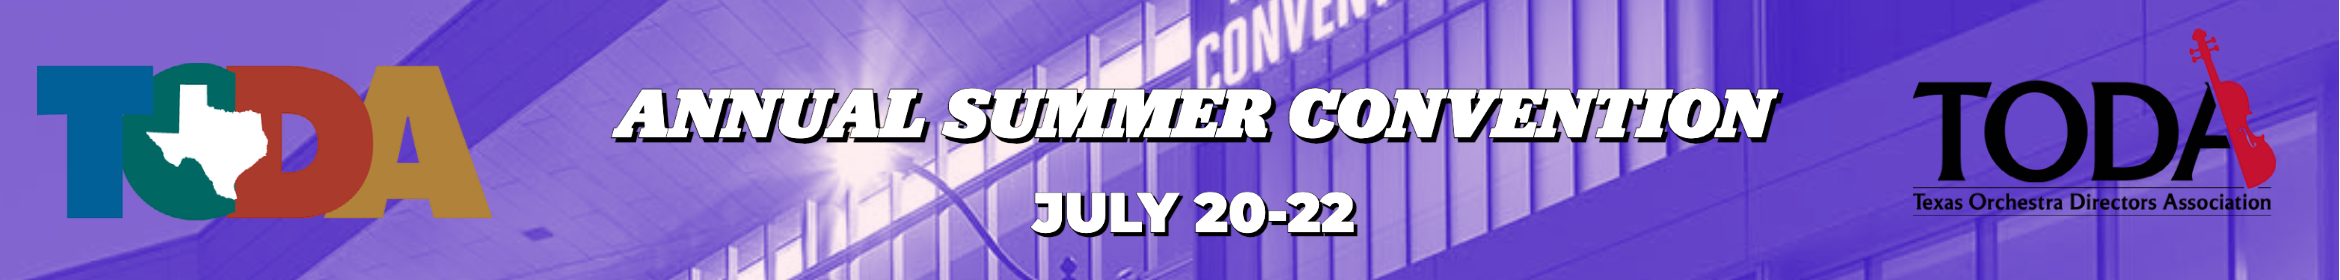 Annual Summer Convention 2023 Main banner